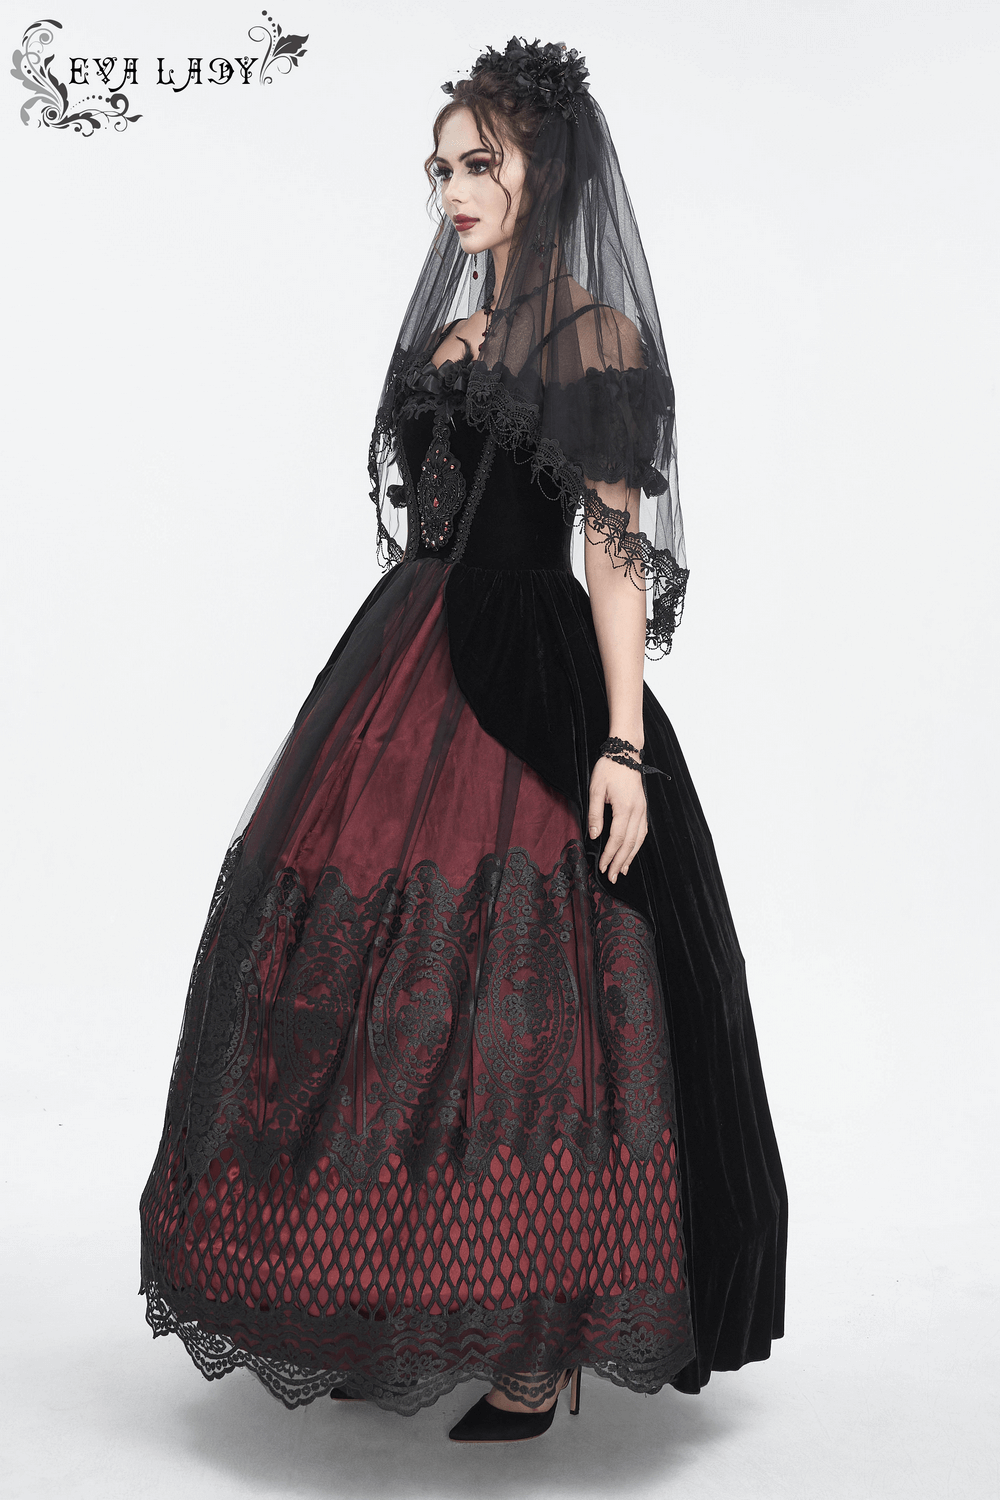 Gothic Elegant Black Veil with Flower Hair Clip